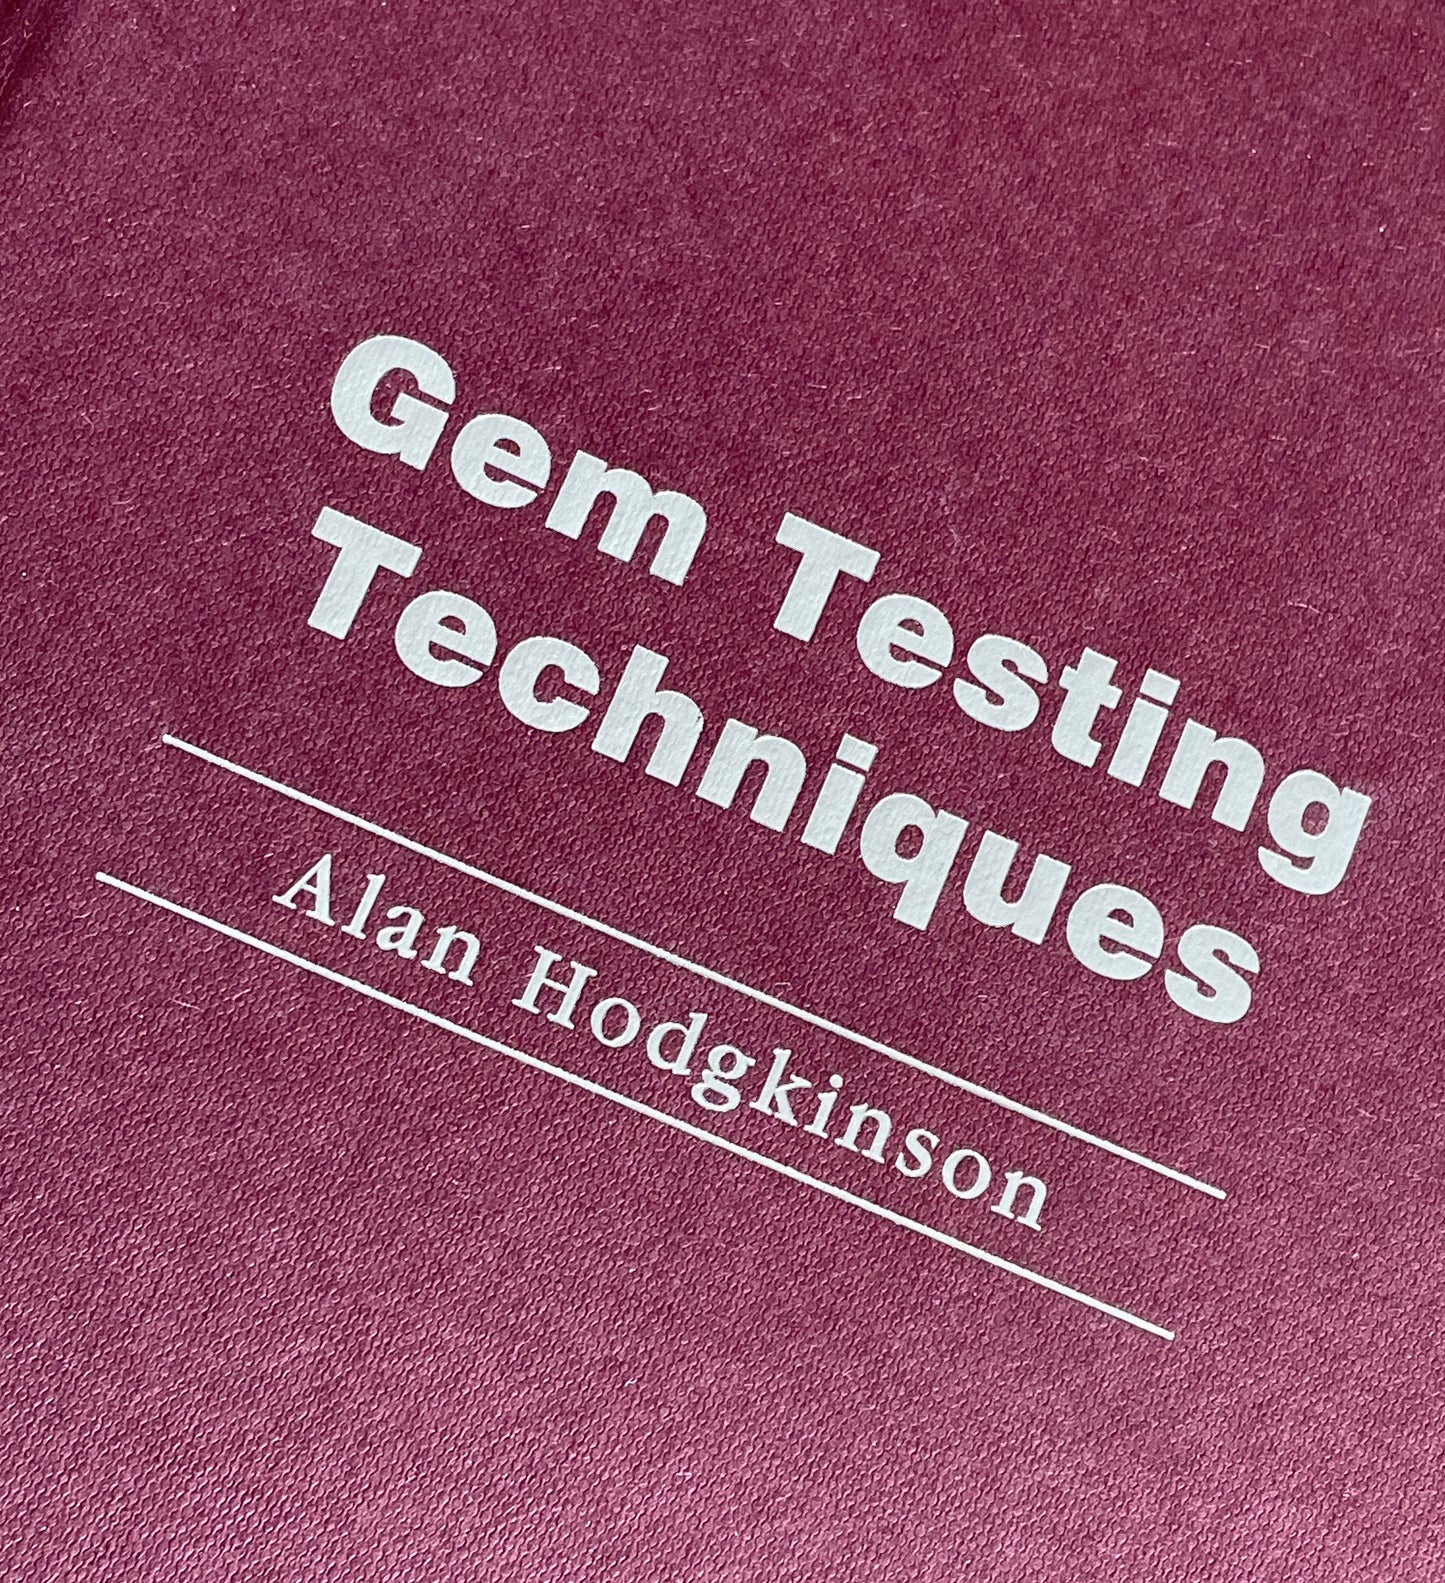 Gem Testing Techniques – third printing – garnet